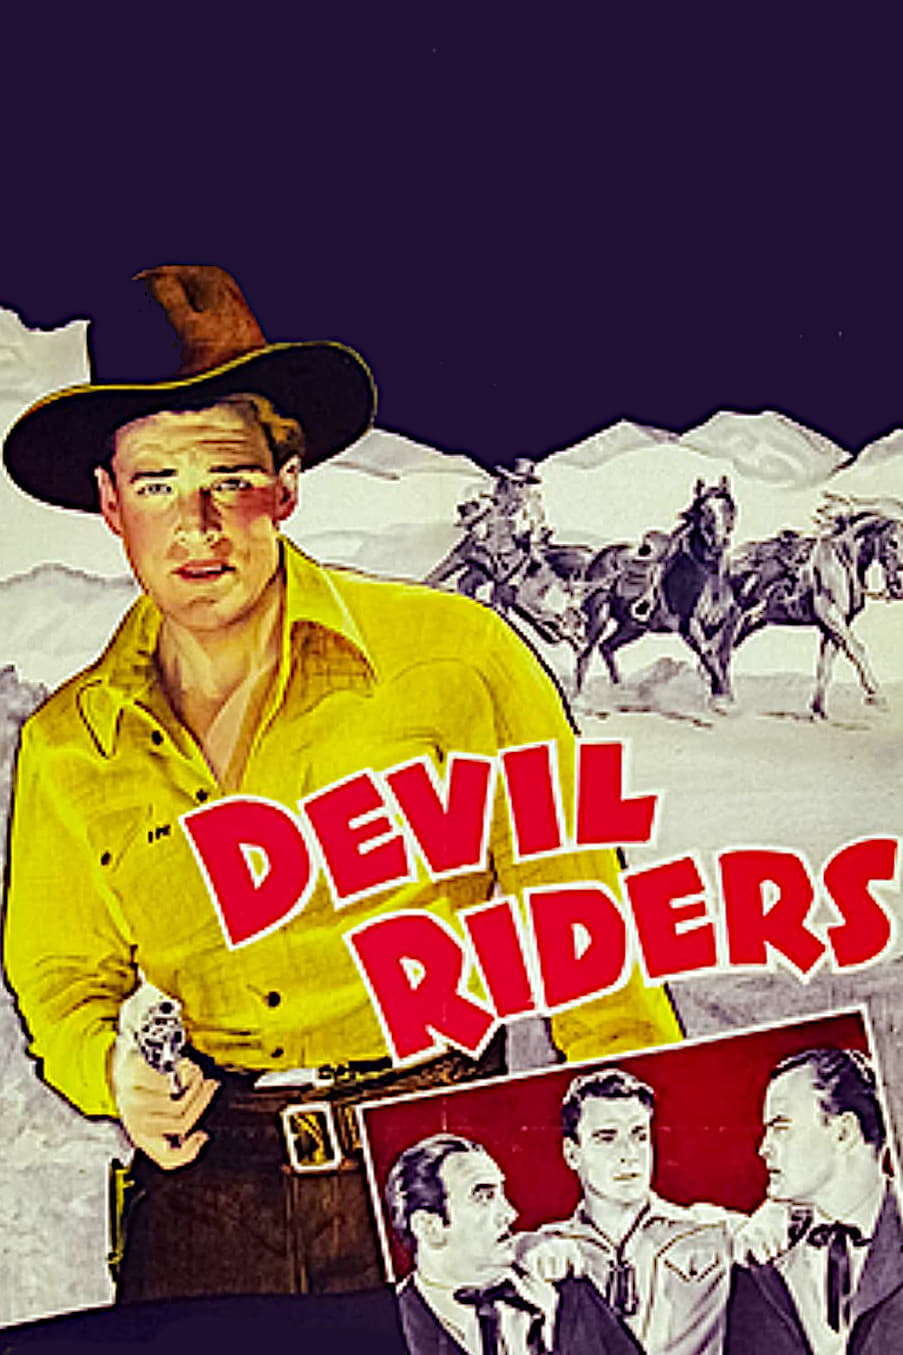 Devil Riders